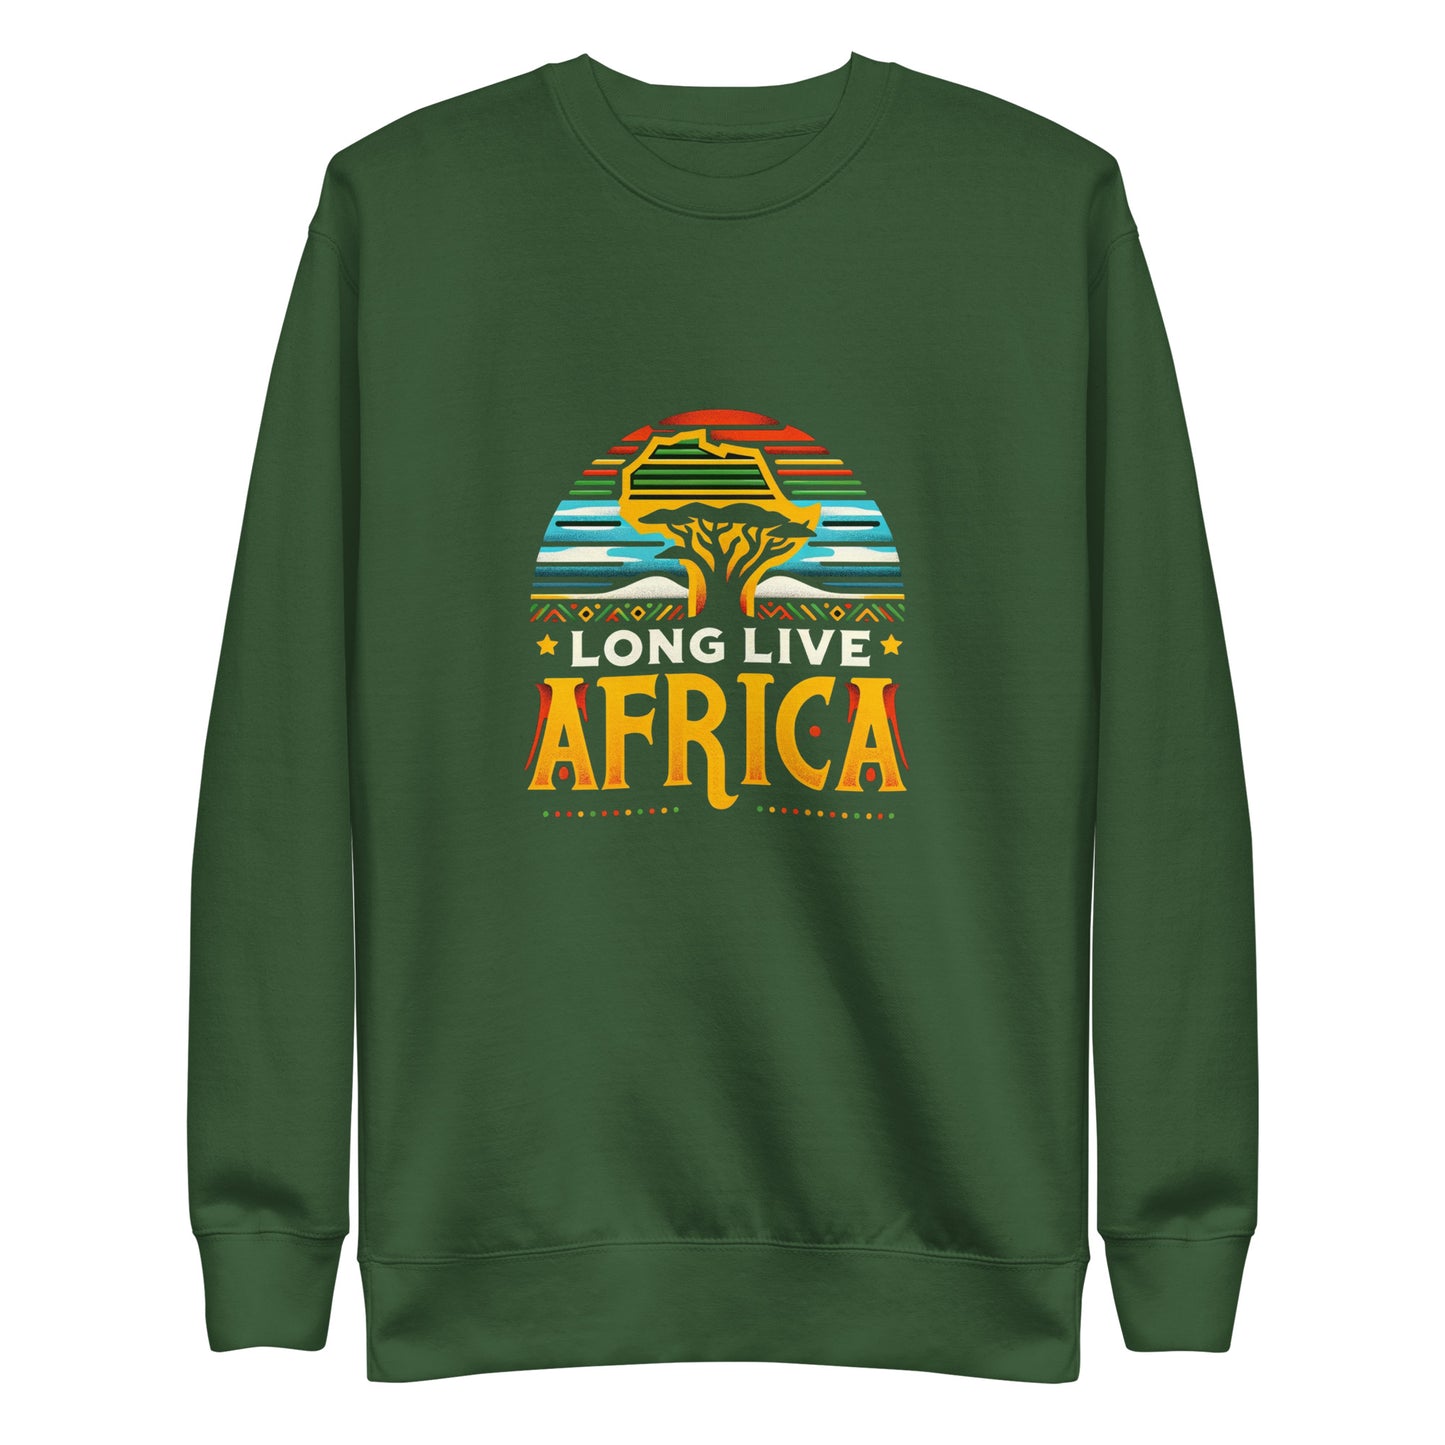 Long Live Africa - Unisex Premium Sweatshirt